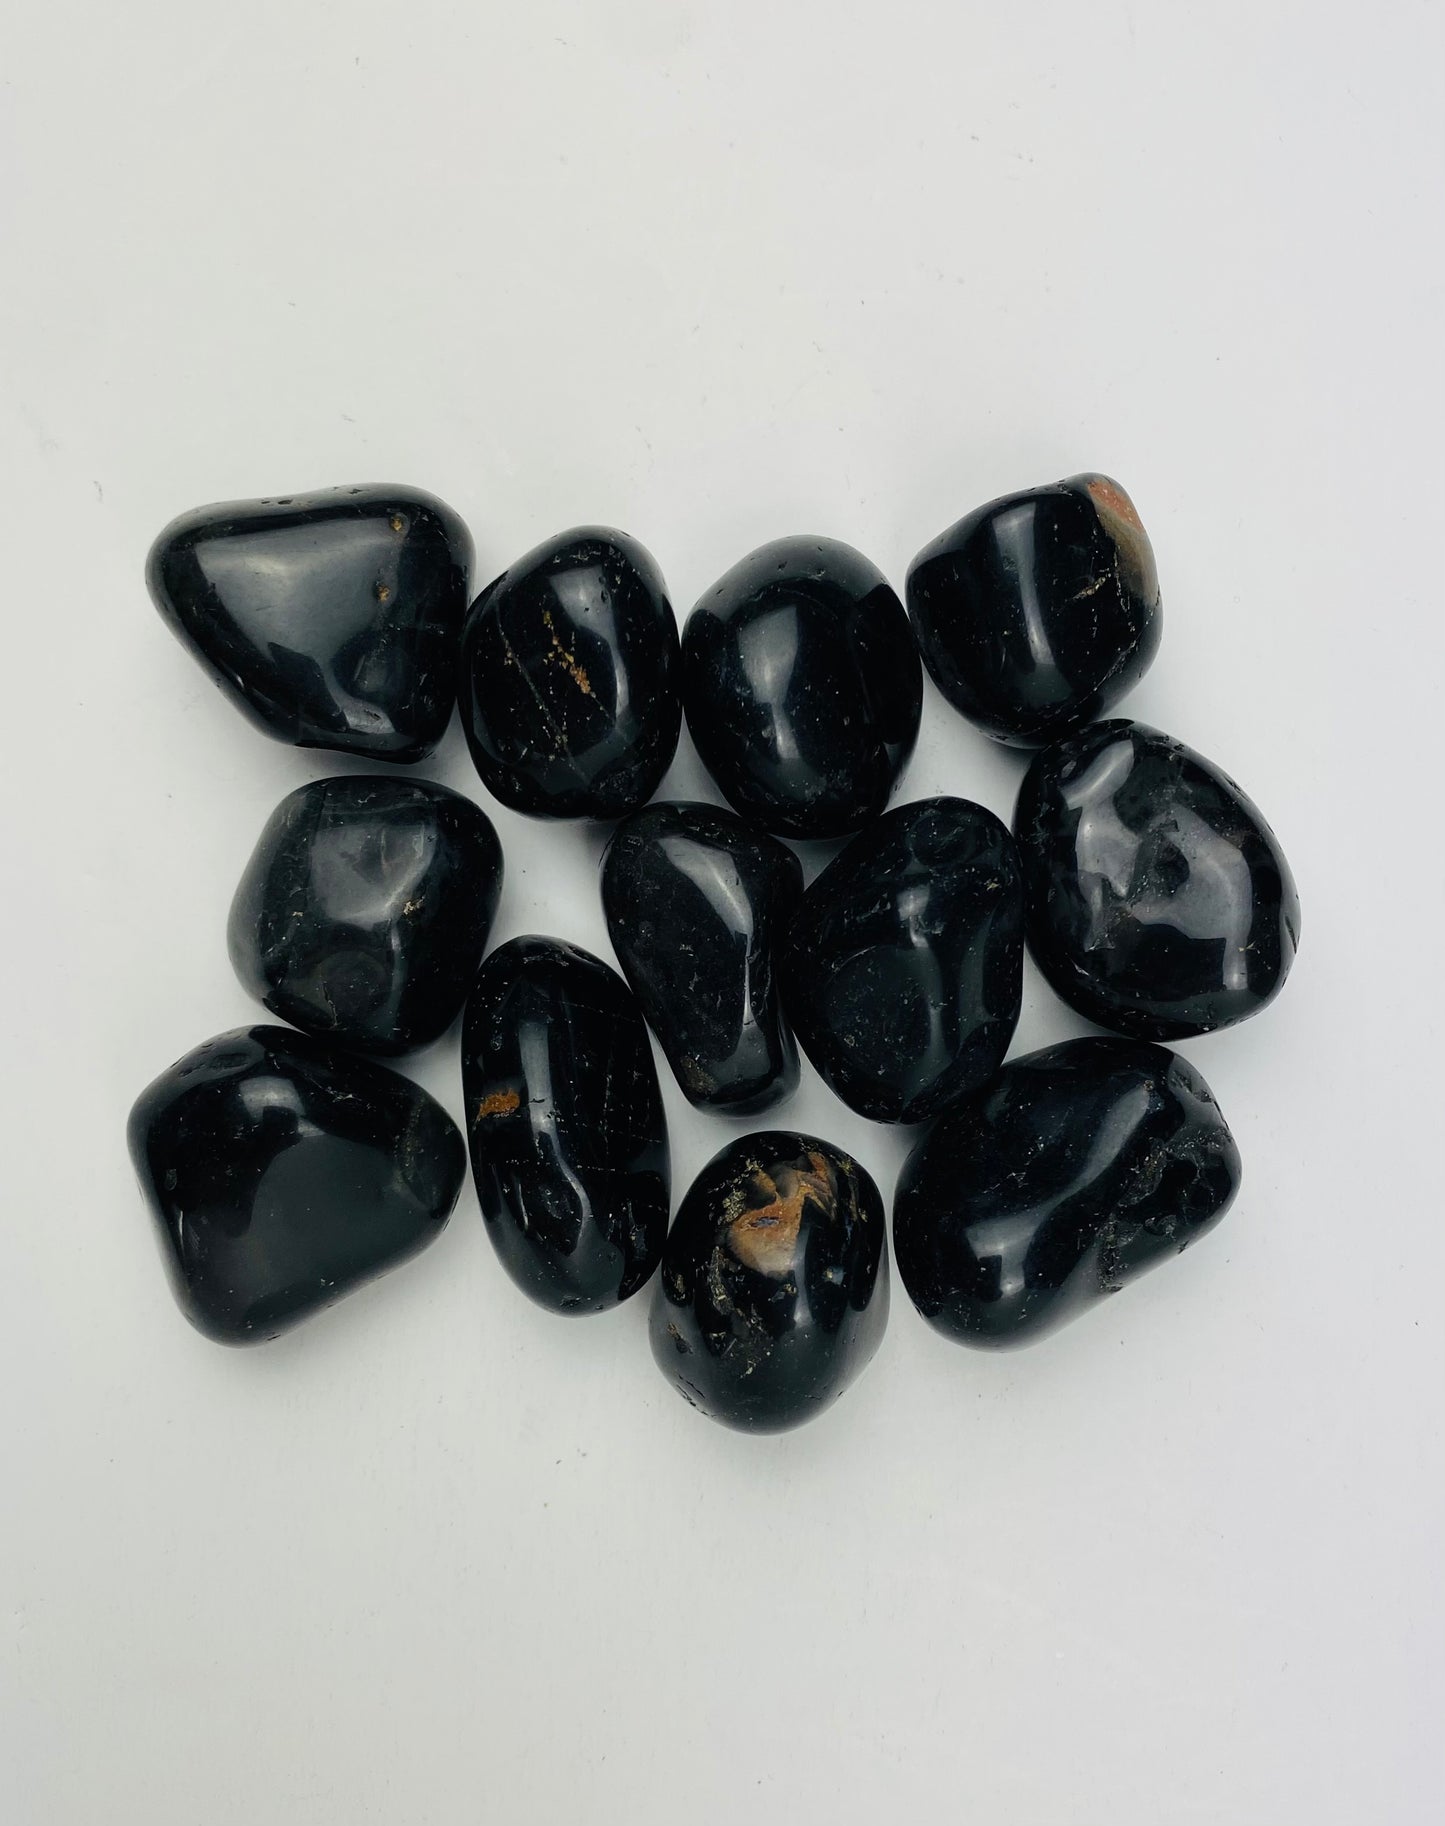 Black obsidian Tumbled